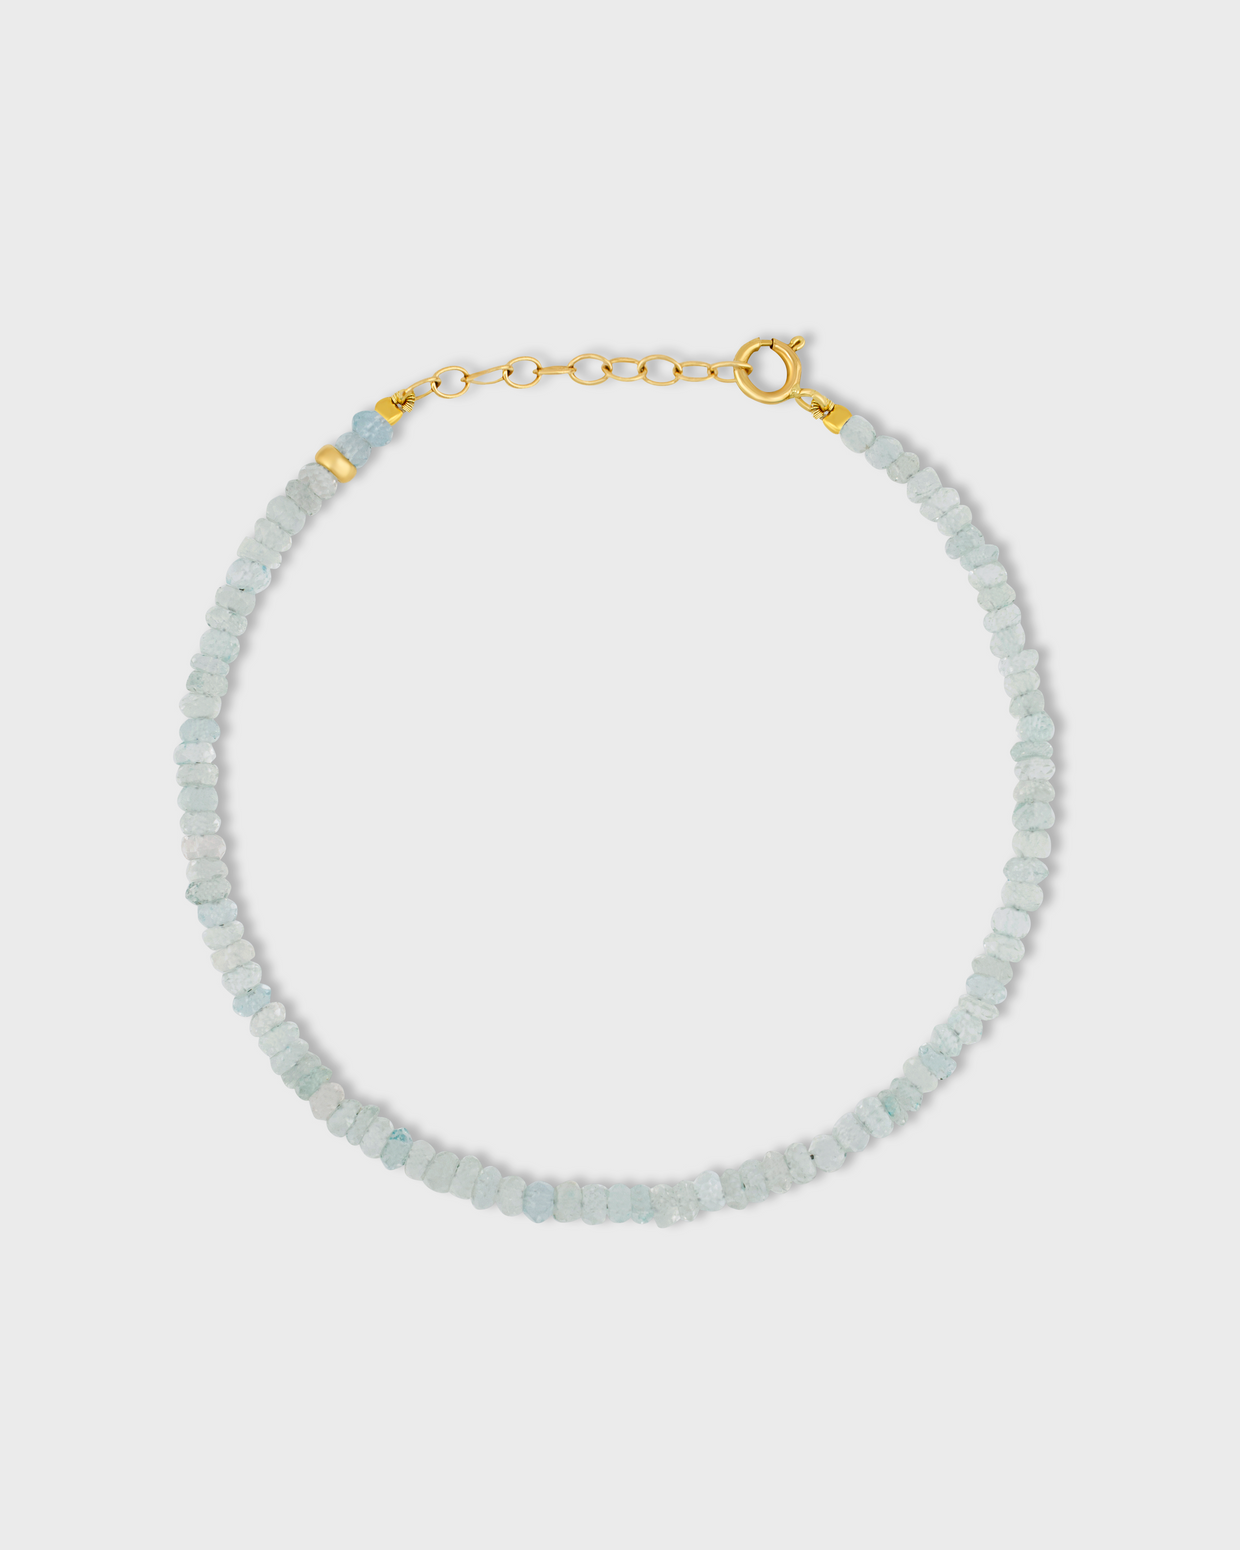 Birthstone March Aquamarine Bracelet